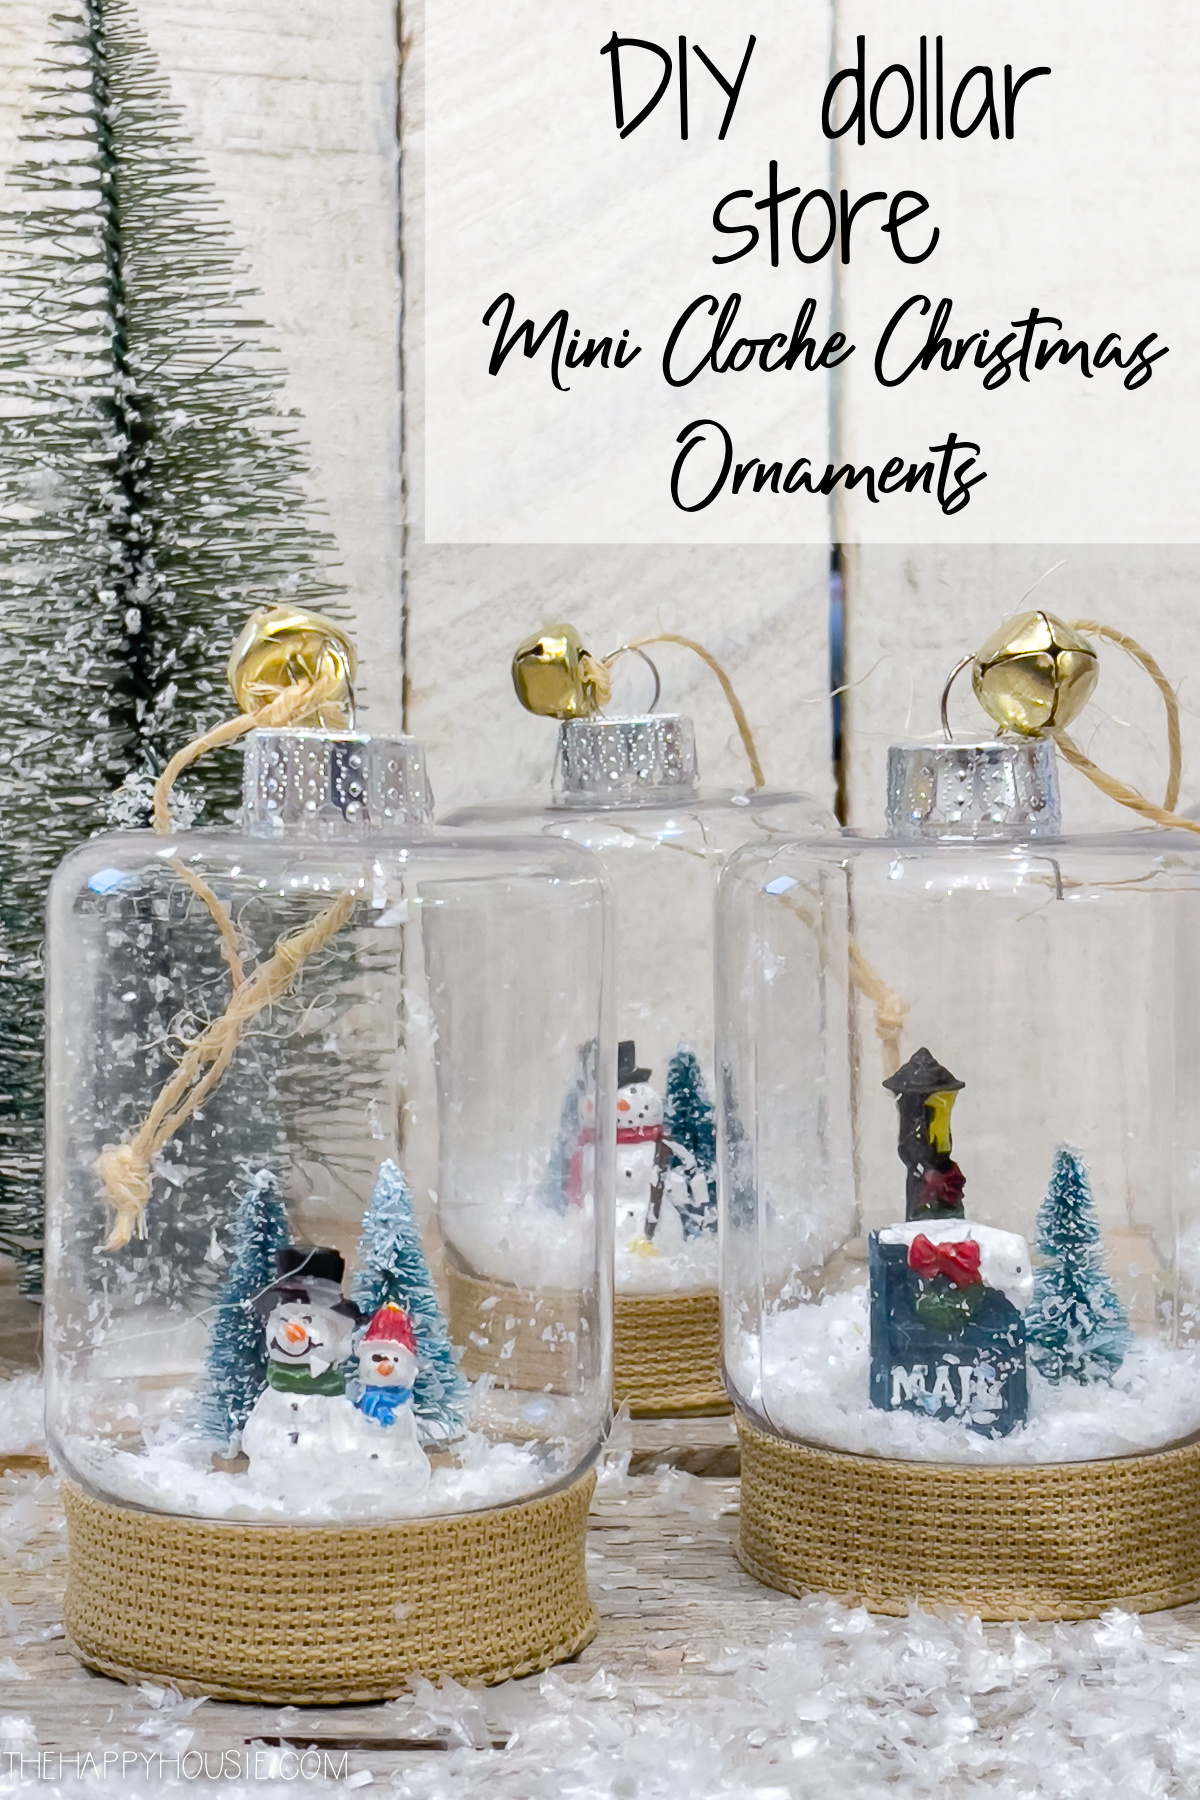 DIY dollar store mini cloche Christmas Ornaments.